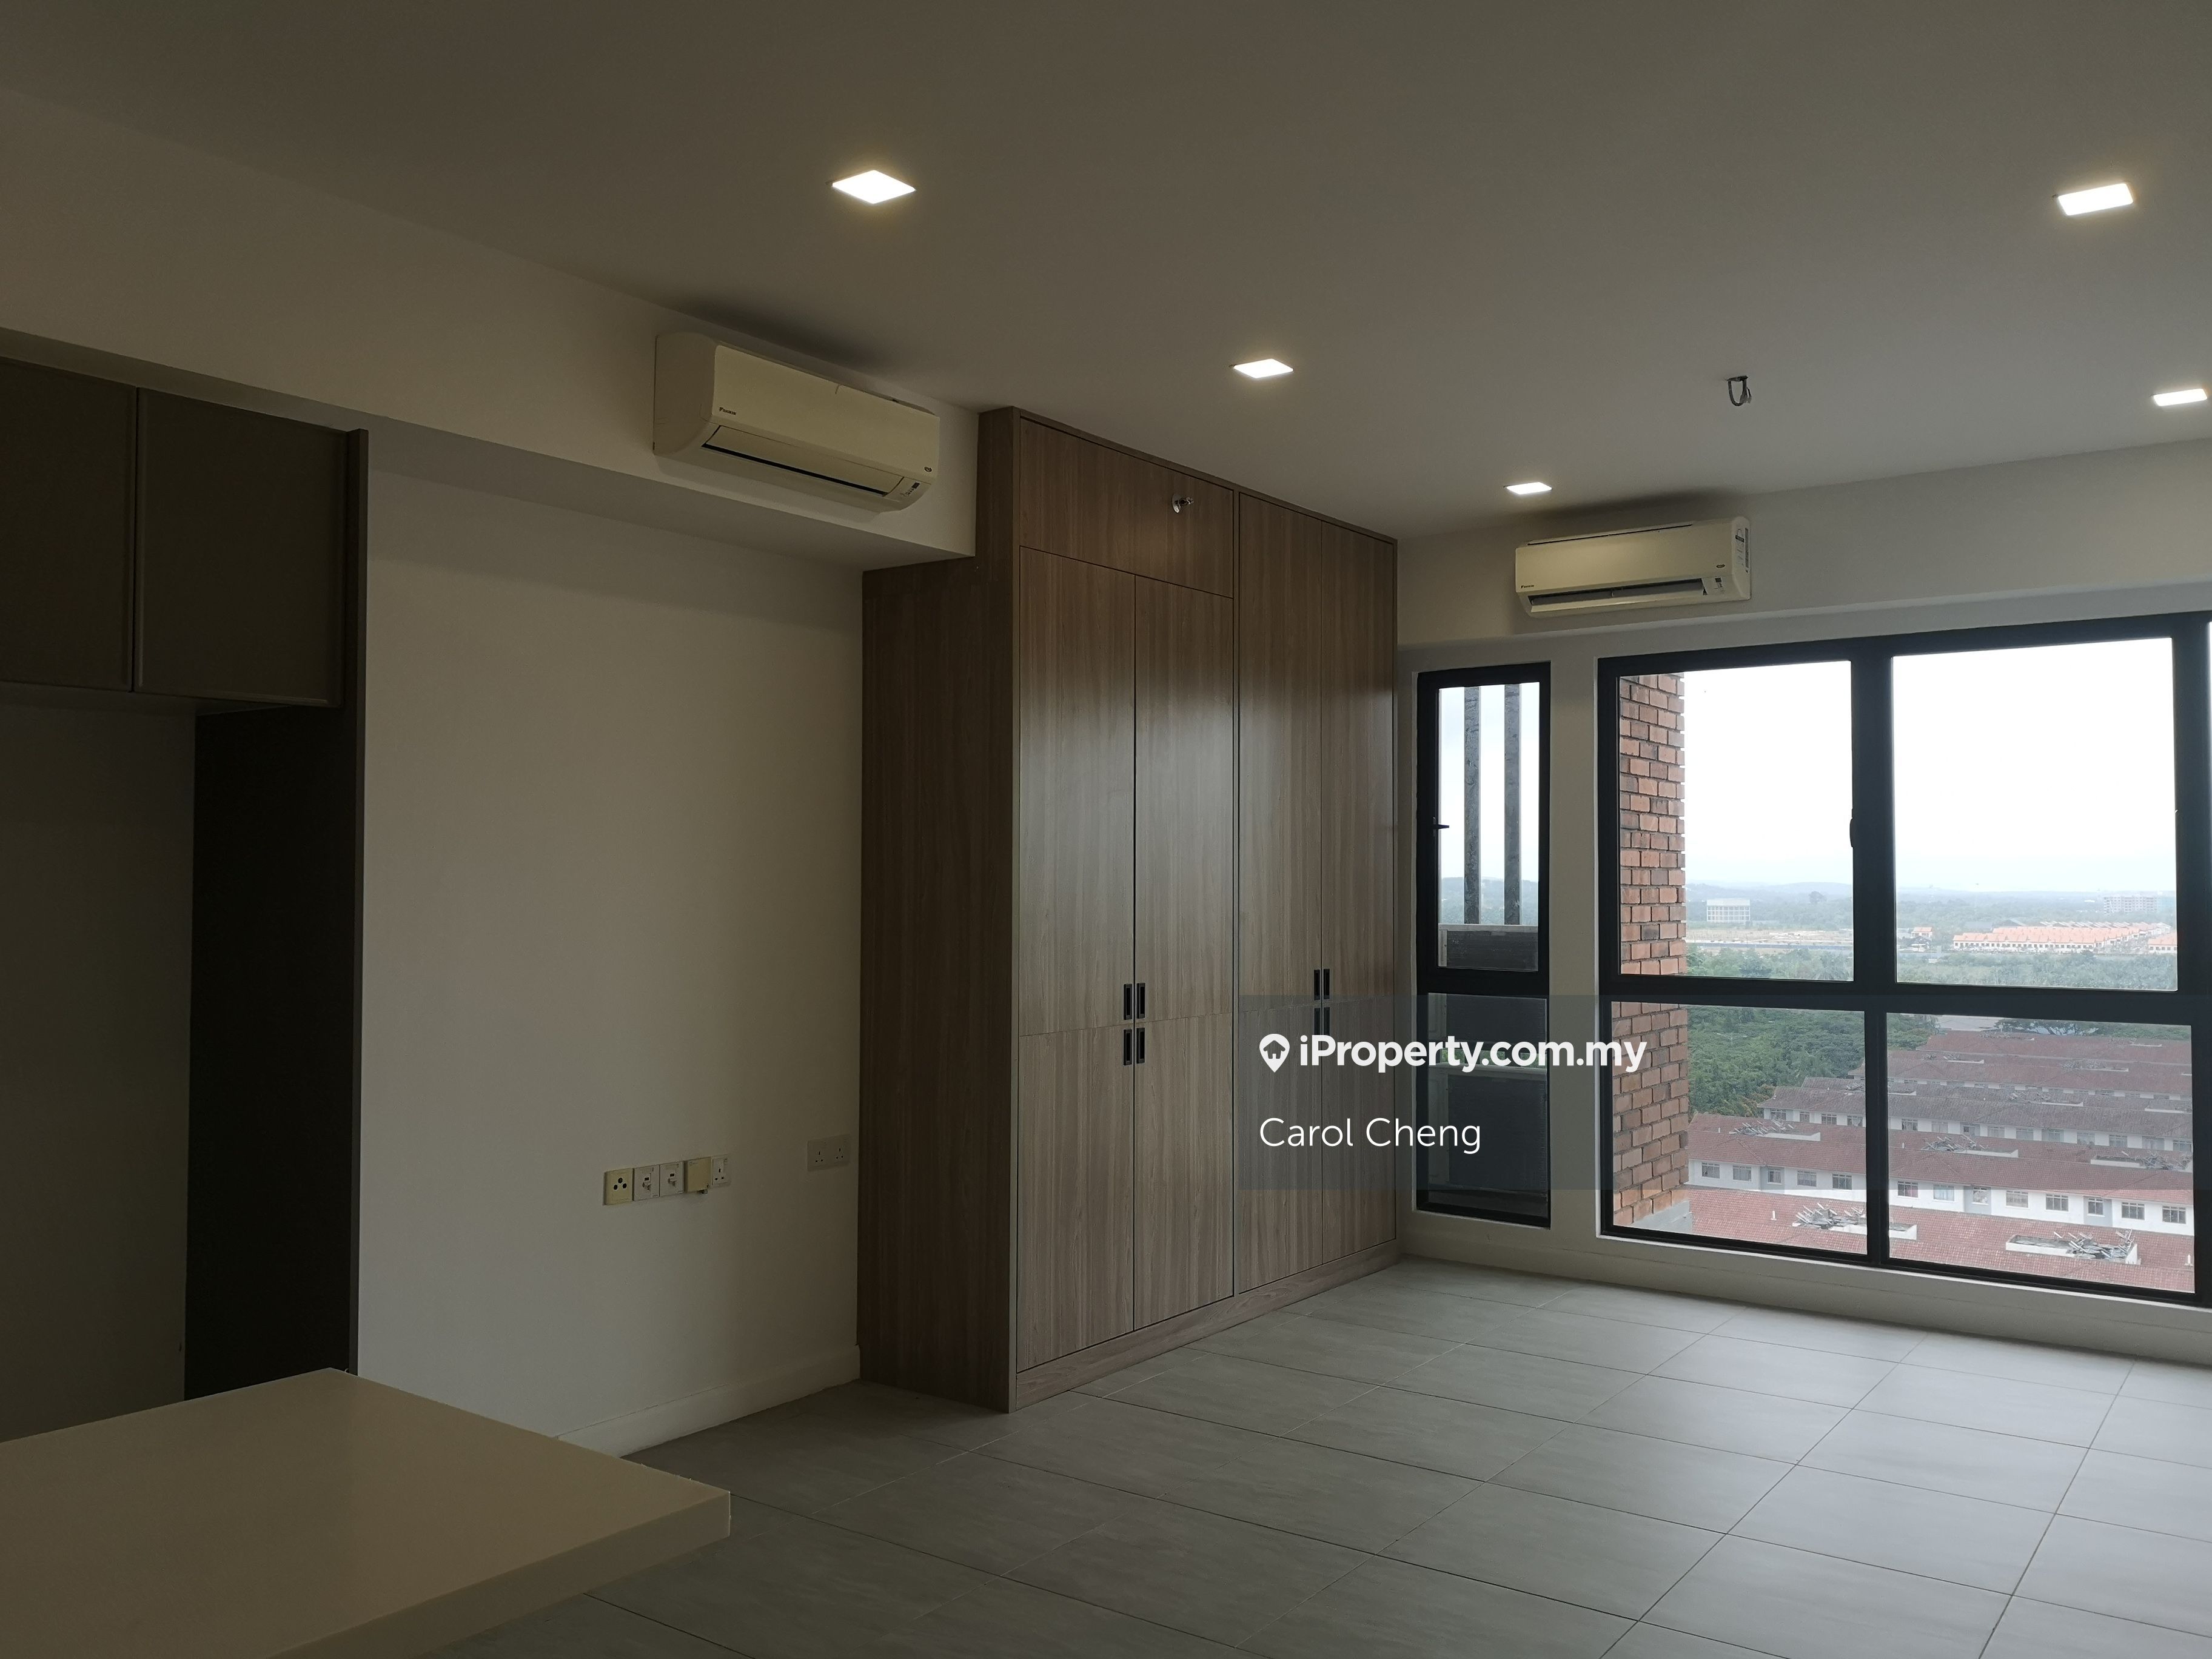 Bell Suites, Sunsuria City, Sepang for rent - RM900 | iProperty Malaysia